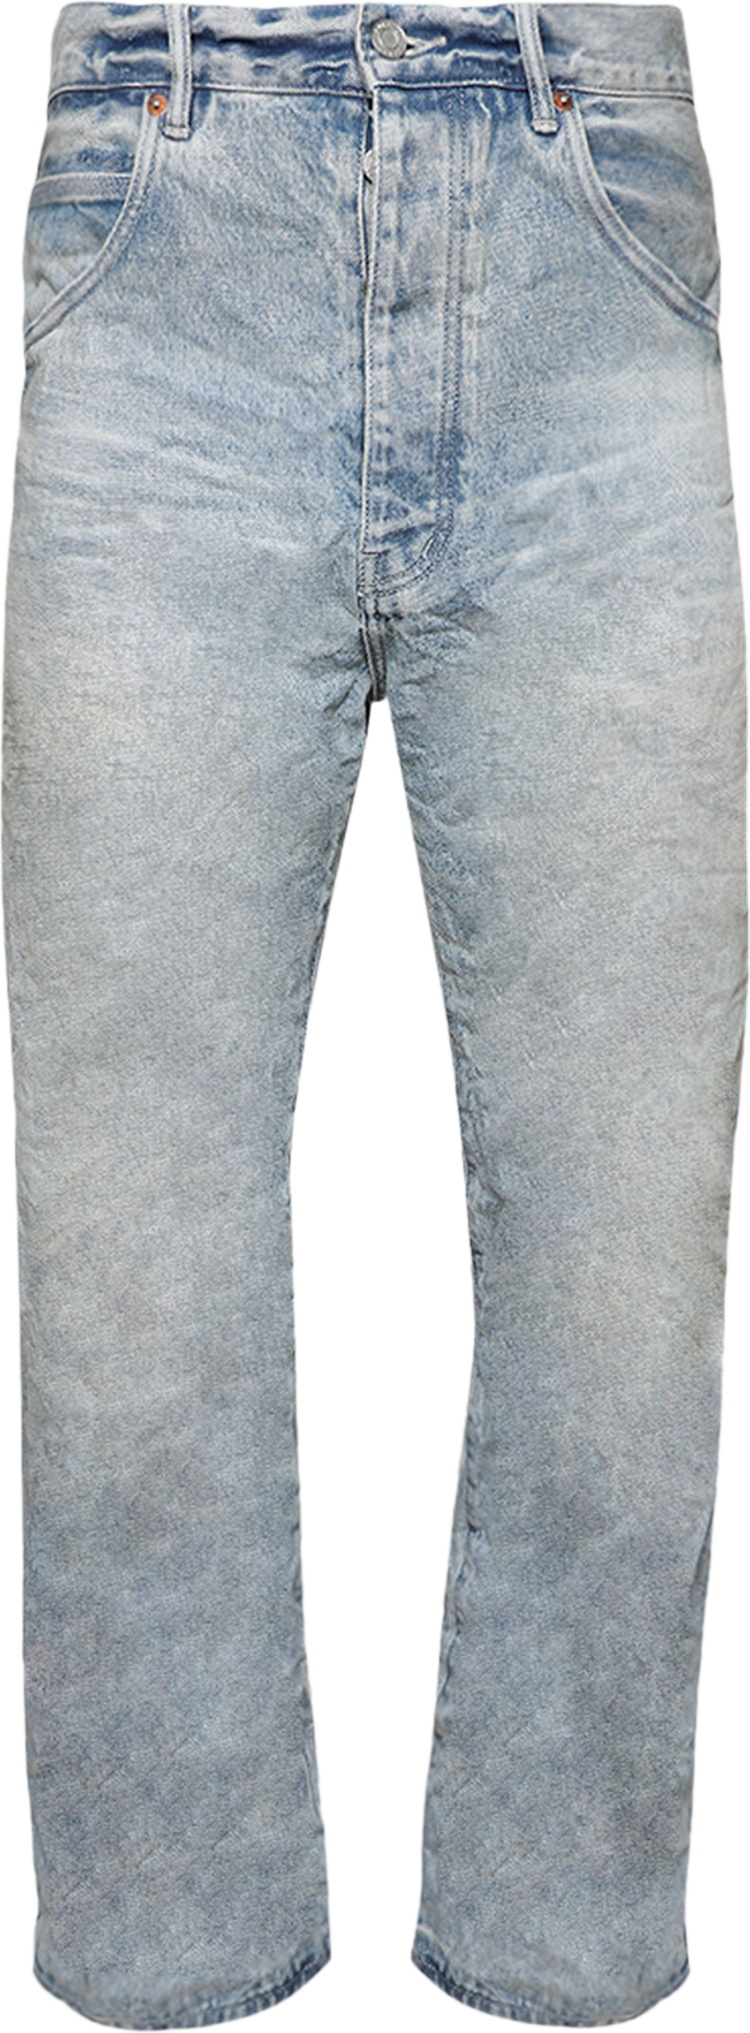 PURPLE Brand Overdye Slim Fit Jeans (Black) – Concepts